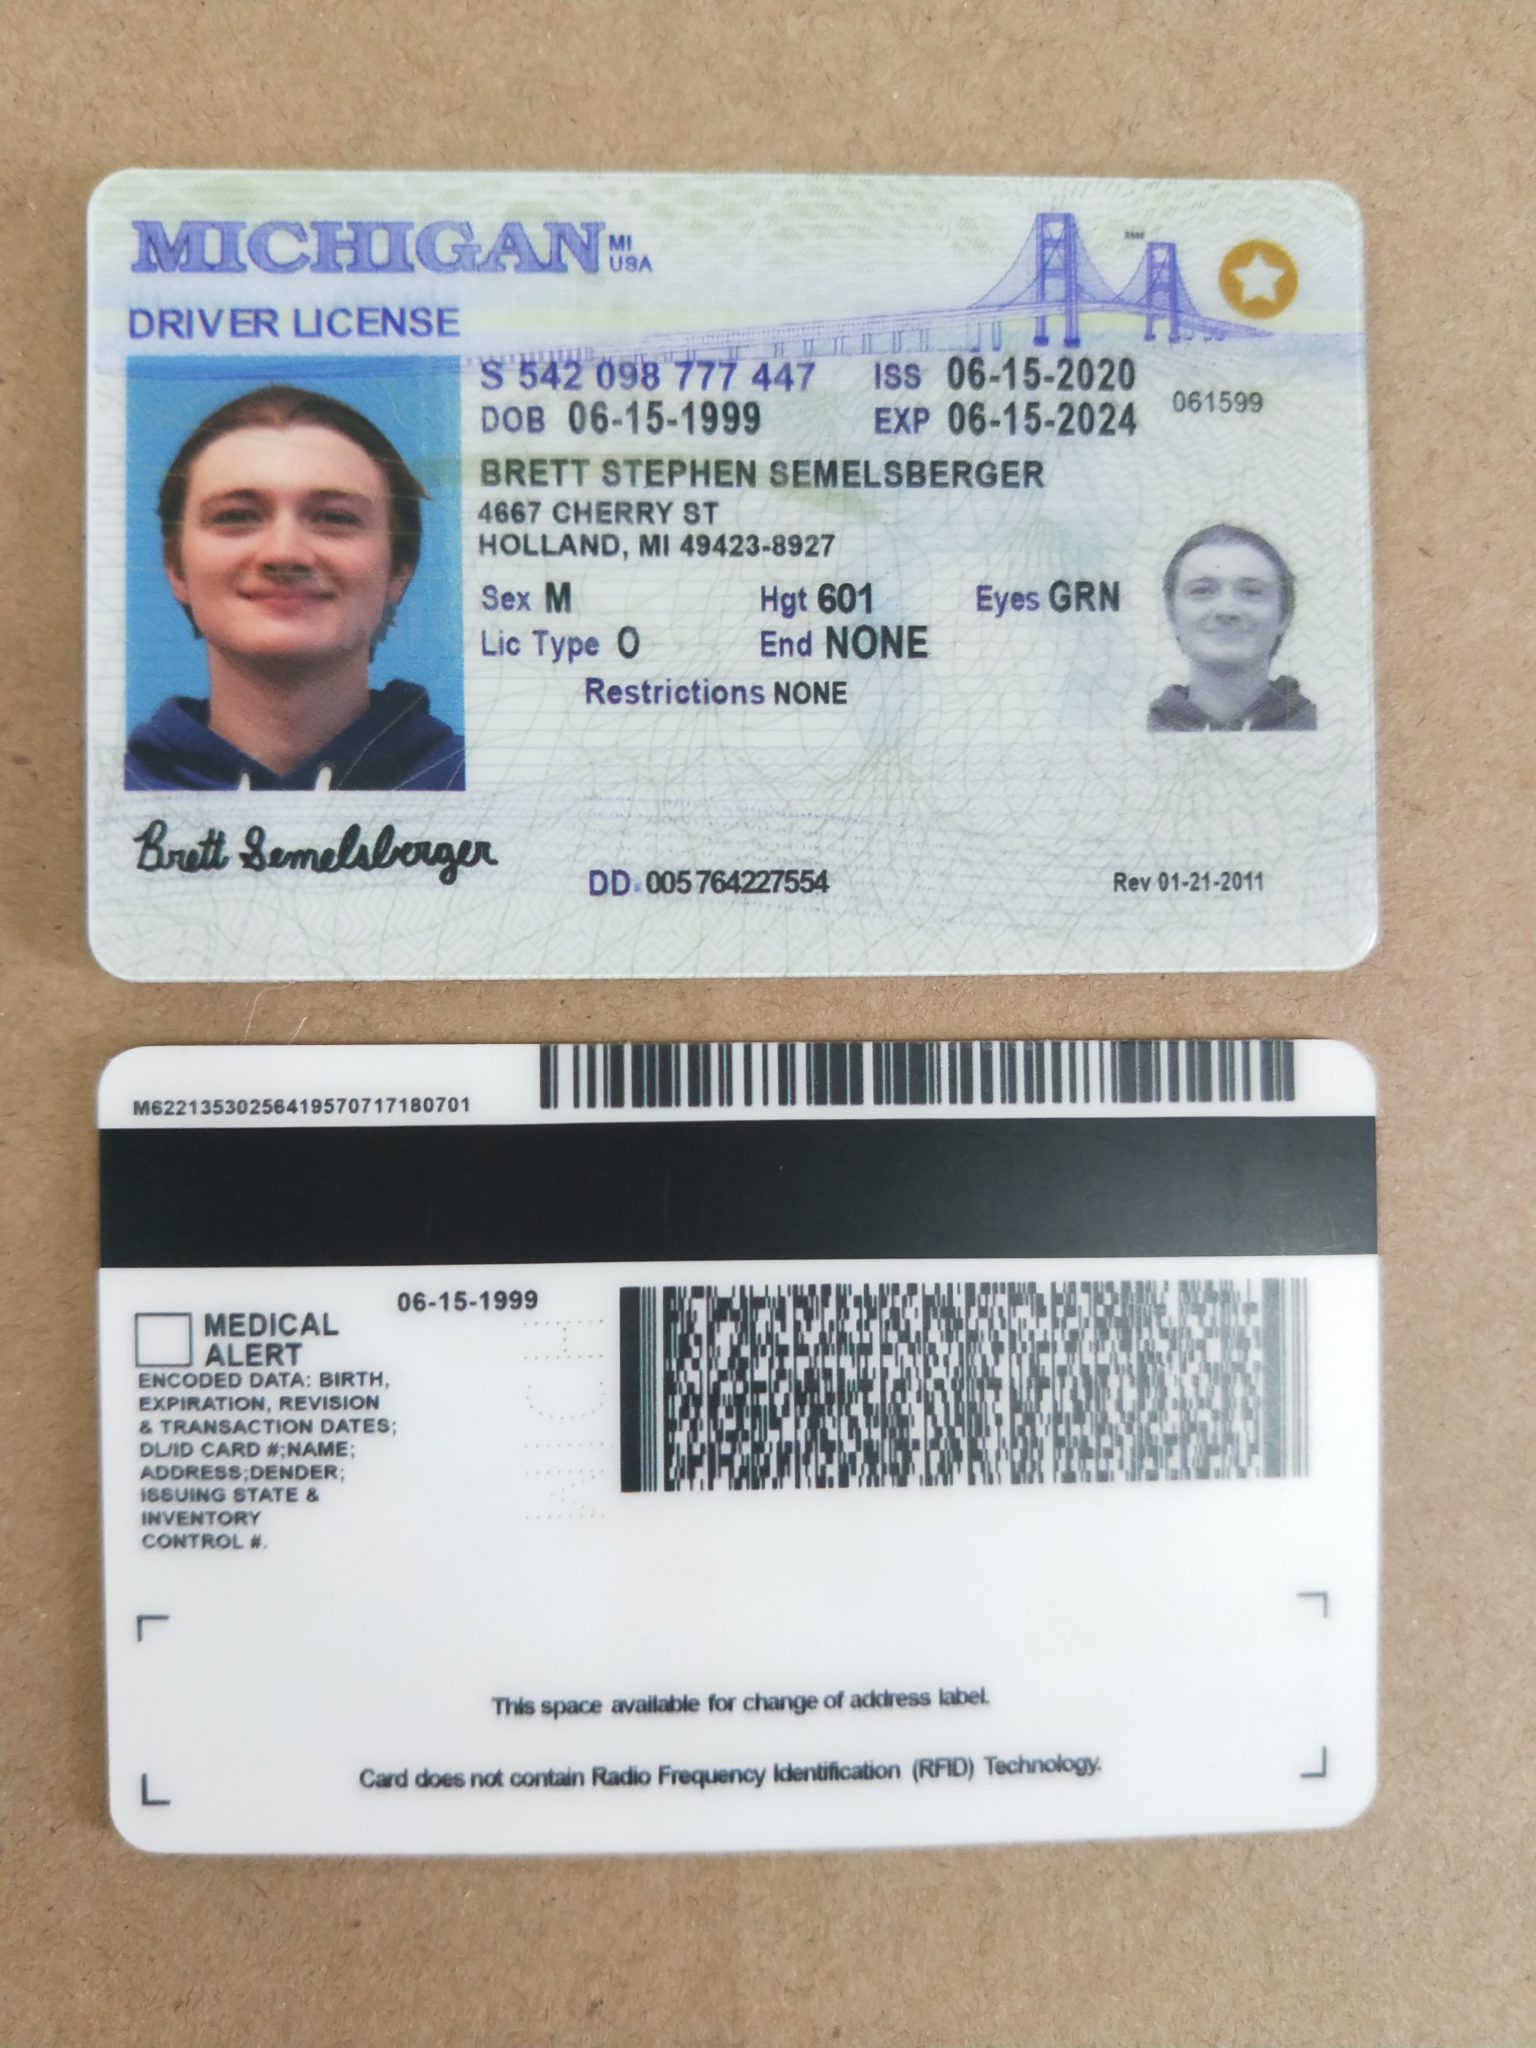 fake id card online